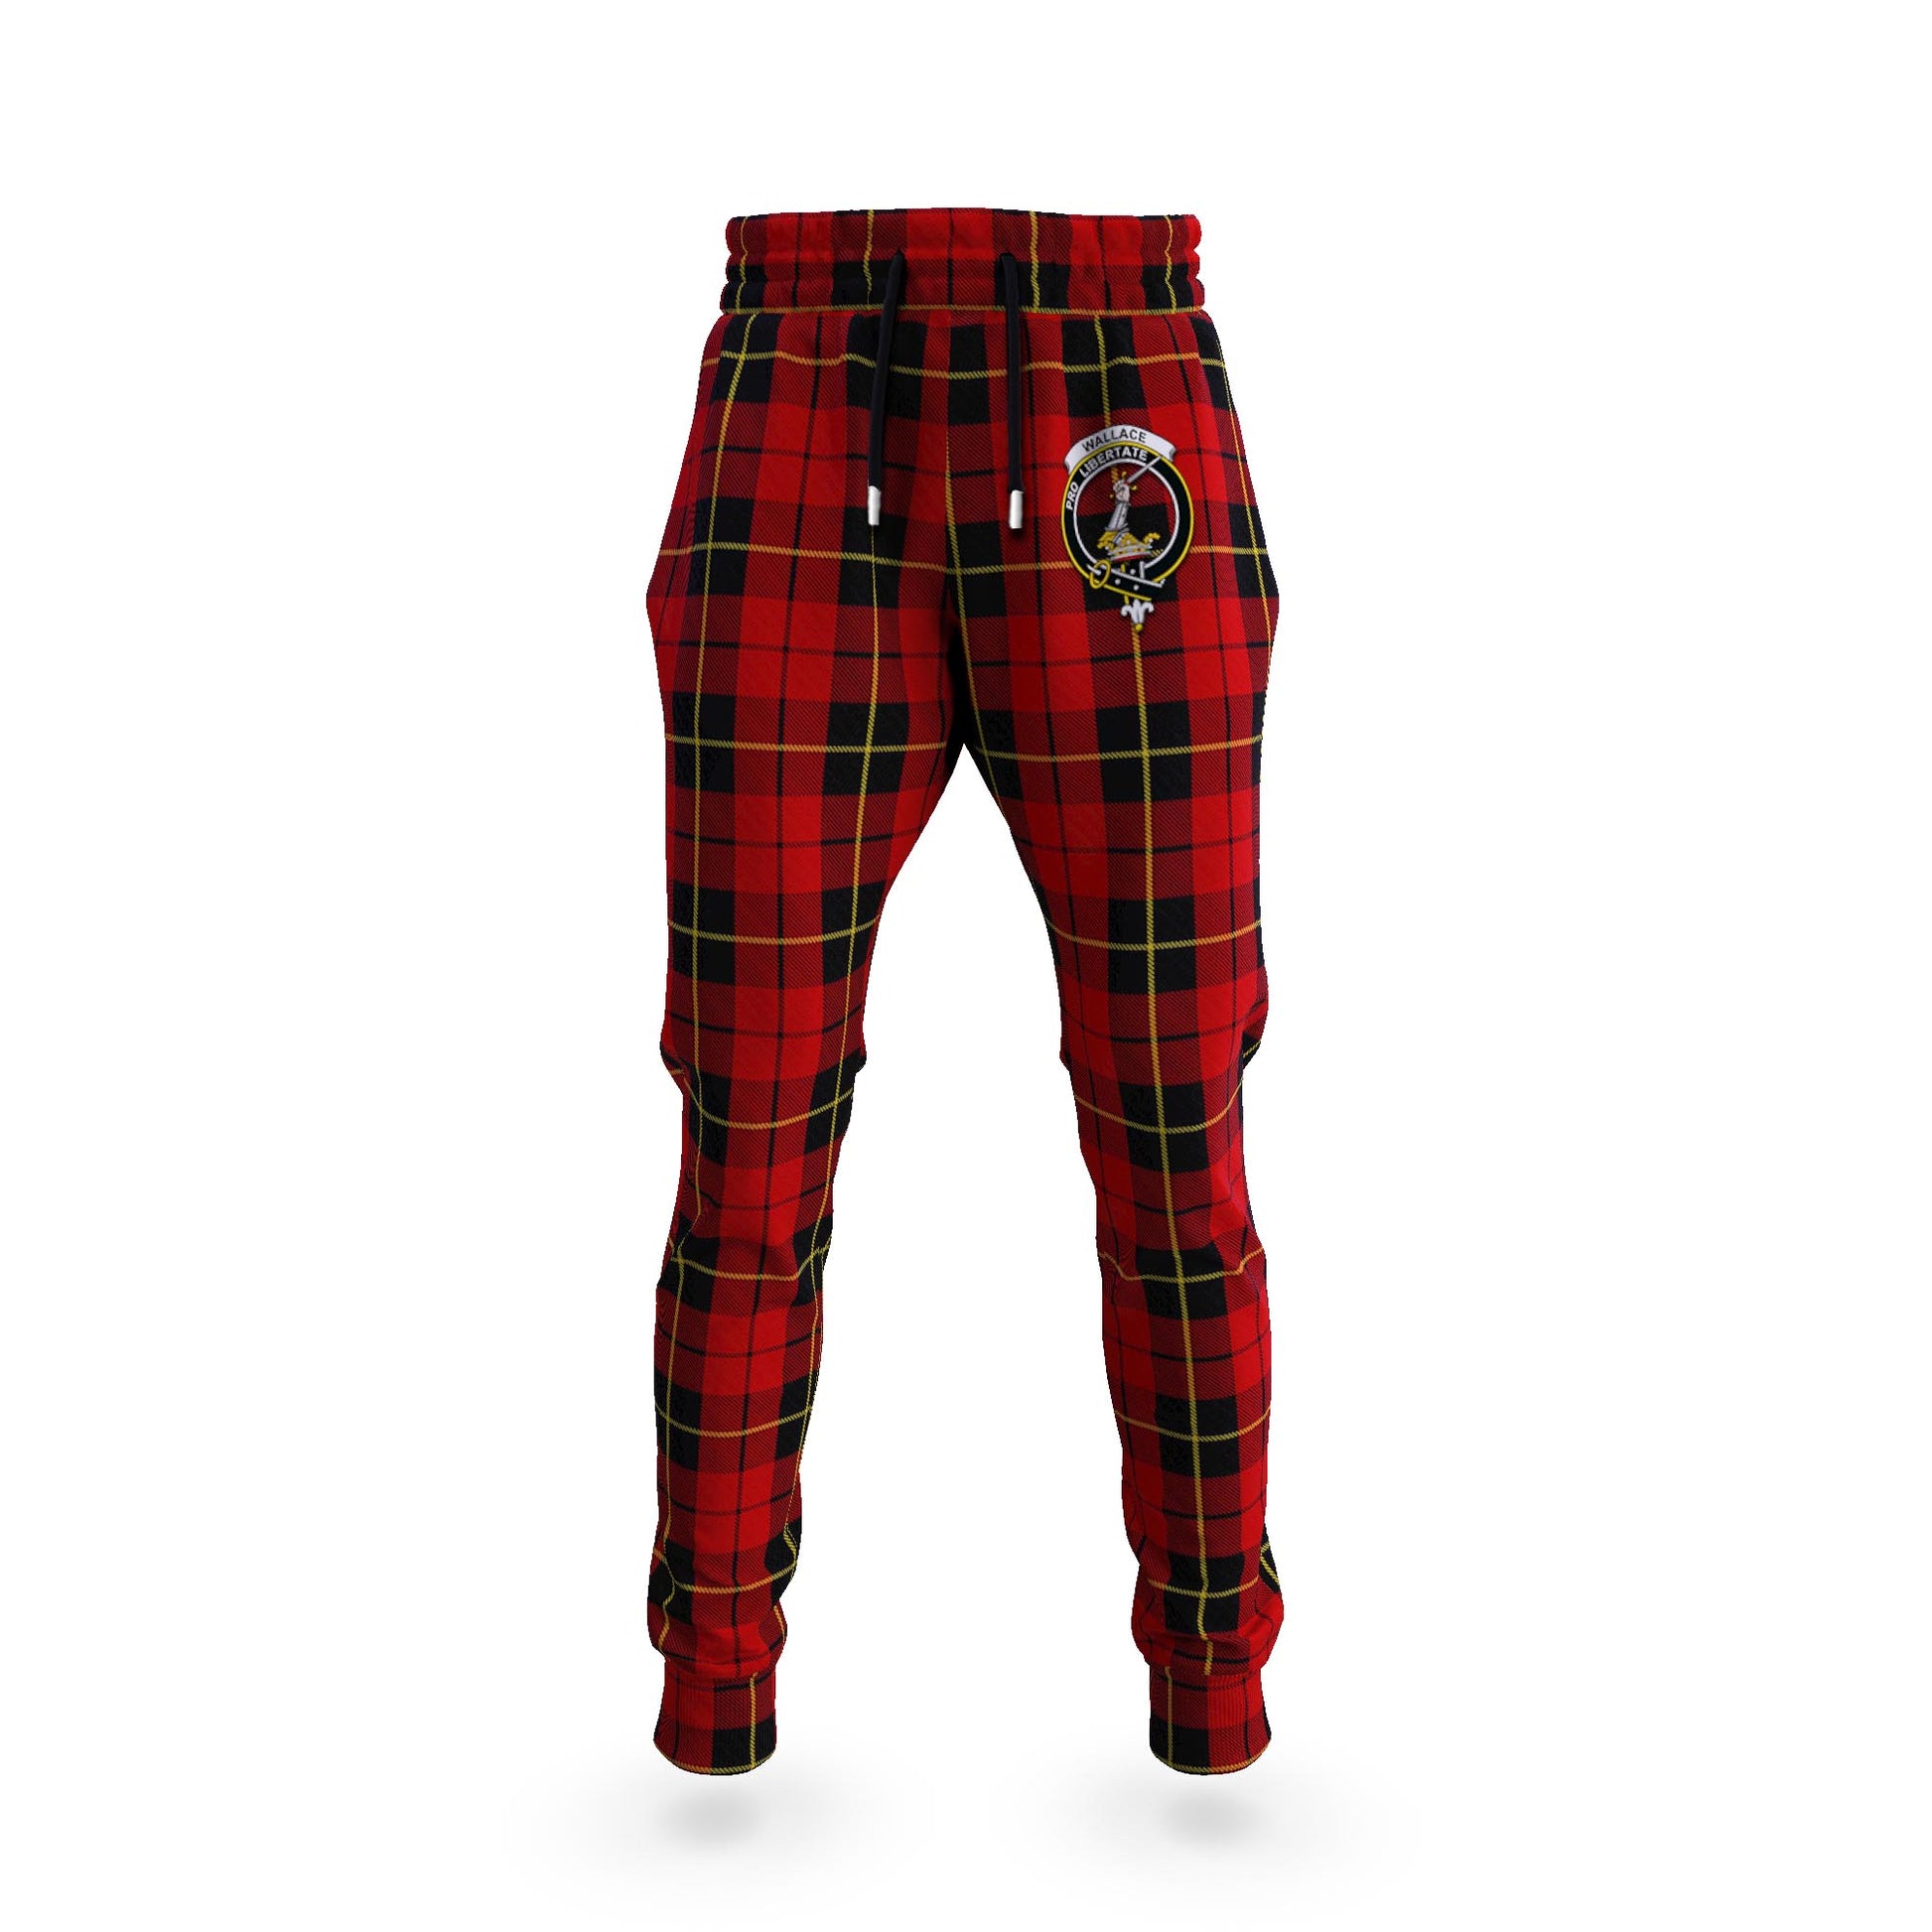 Wallace Tartan Joggers Pants with Family Crest - Tartanvibesclothing Shop